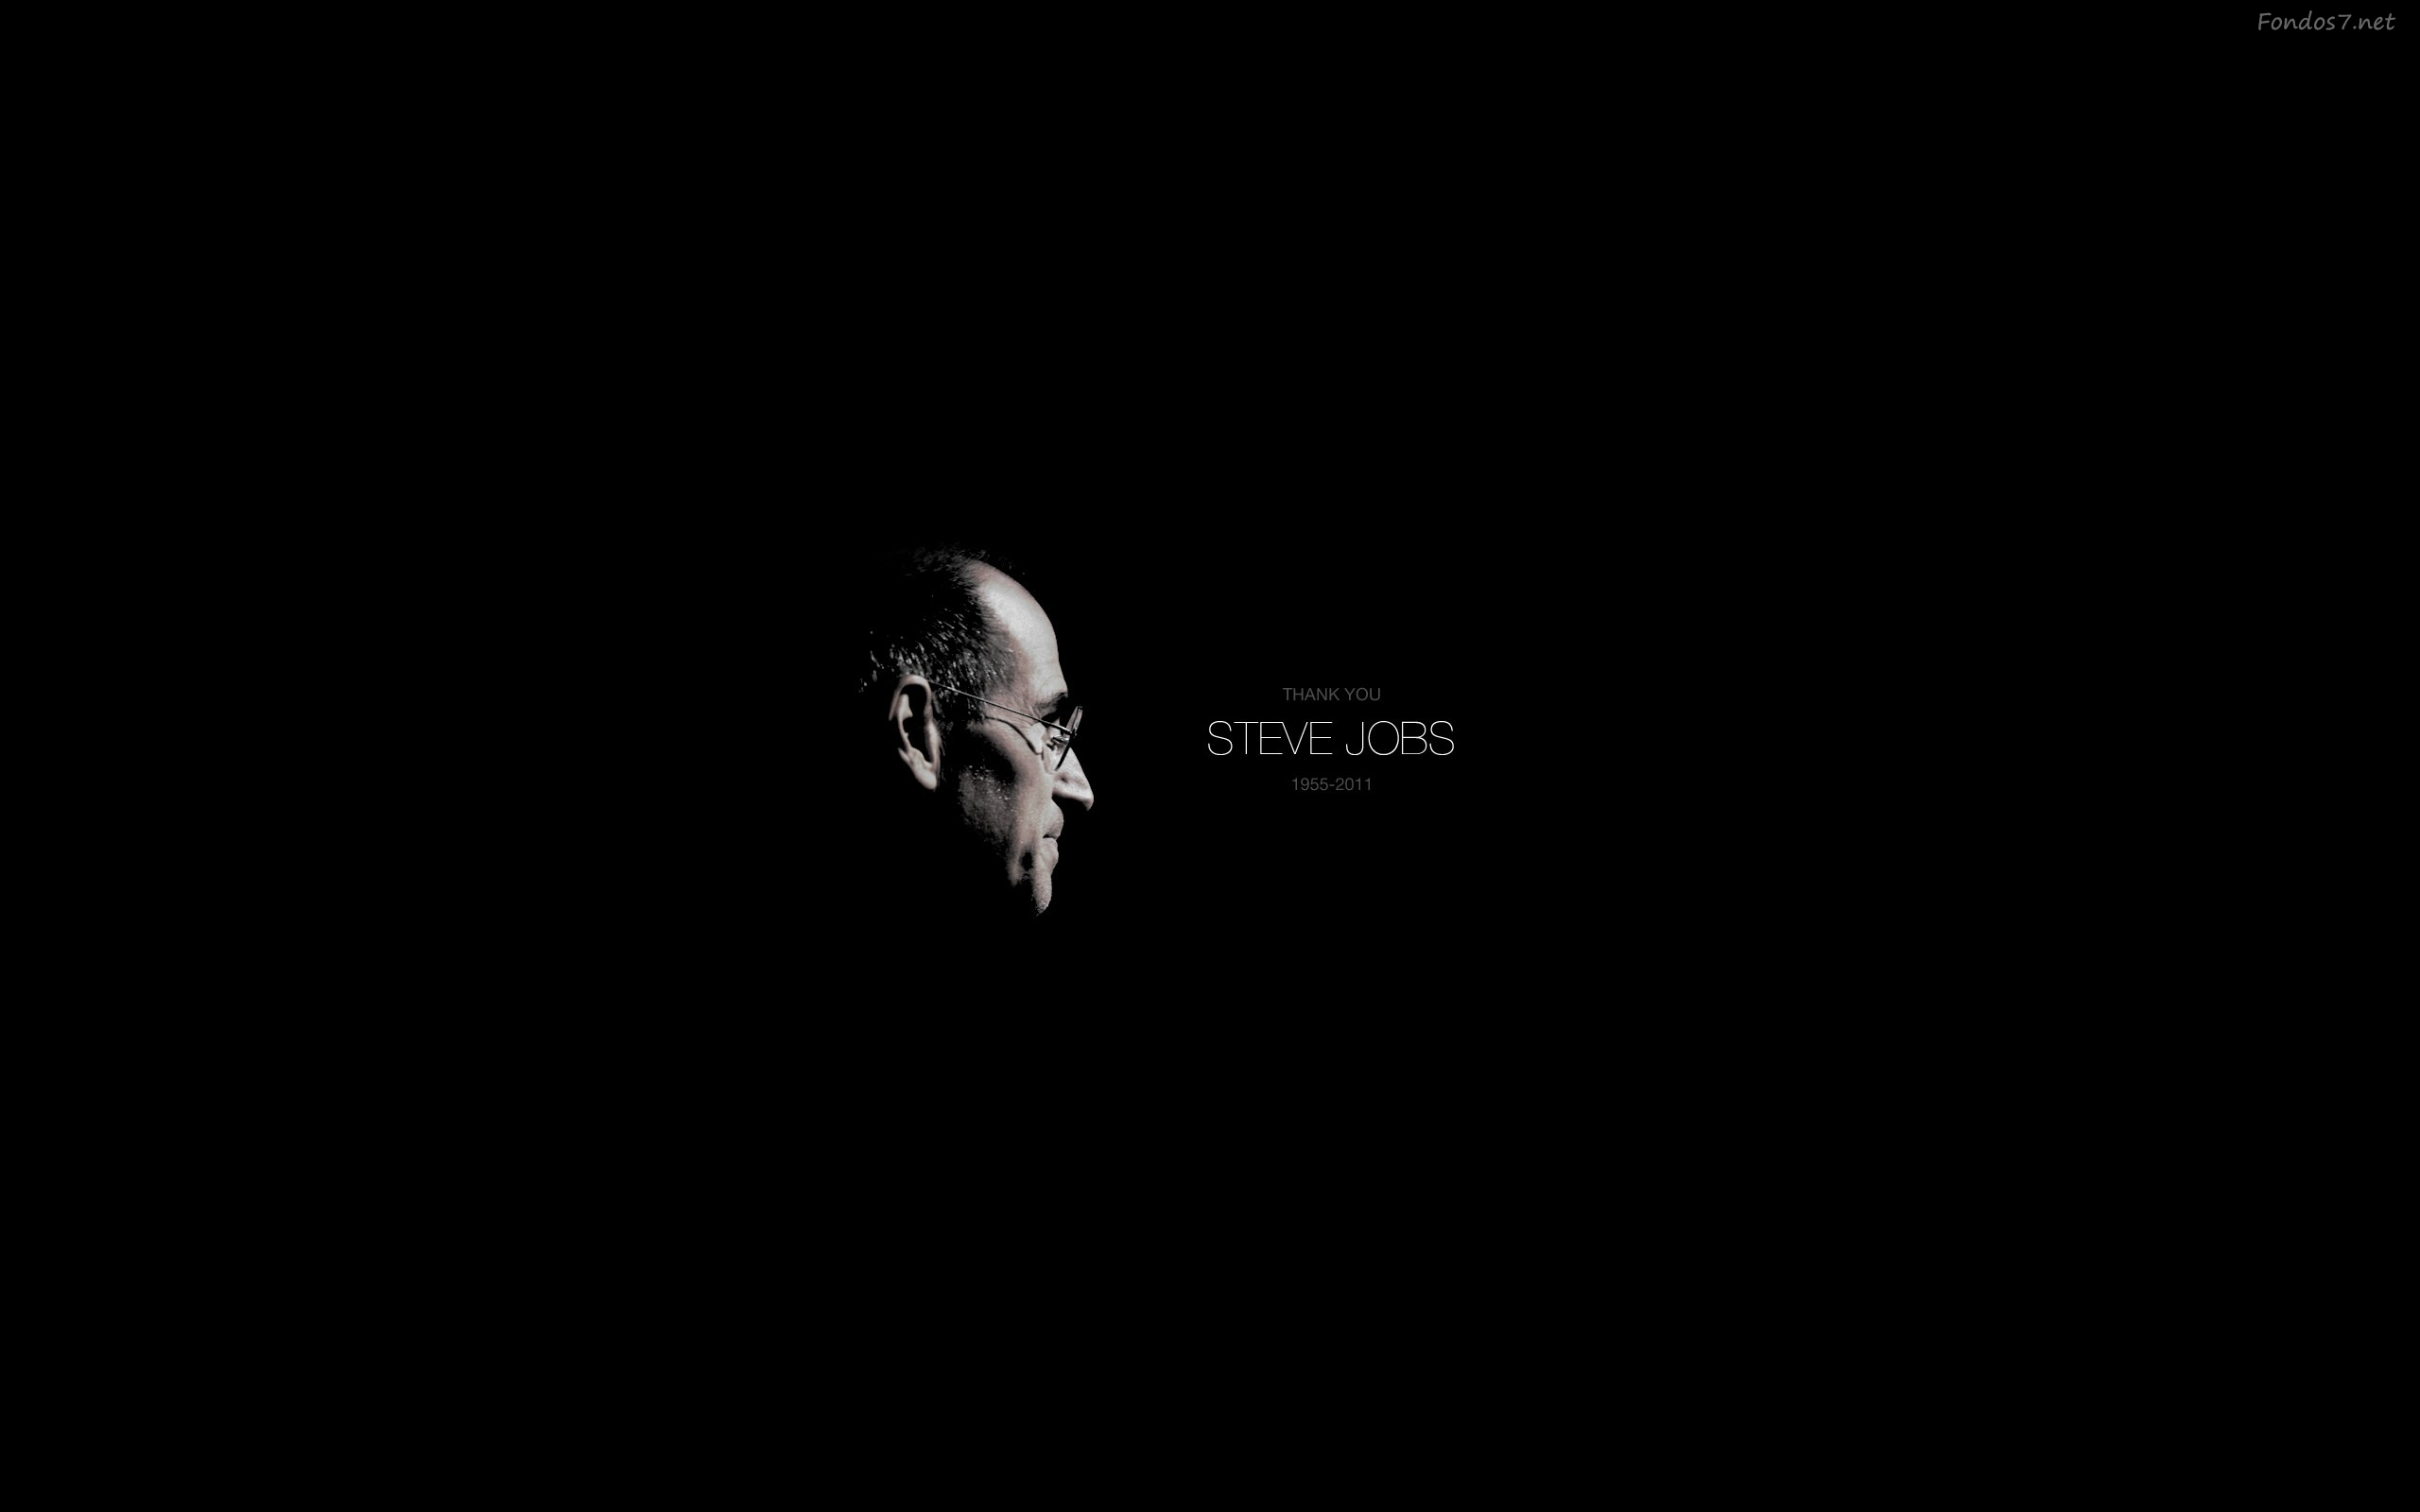 Steve Jobs Wallpaper HD